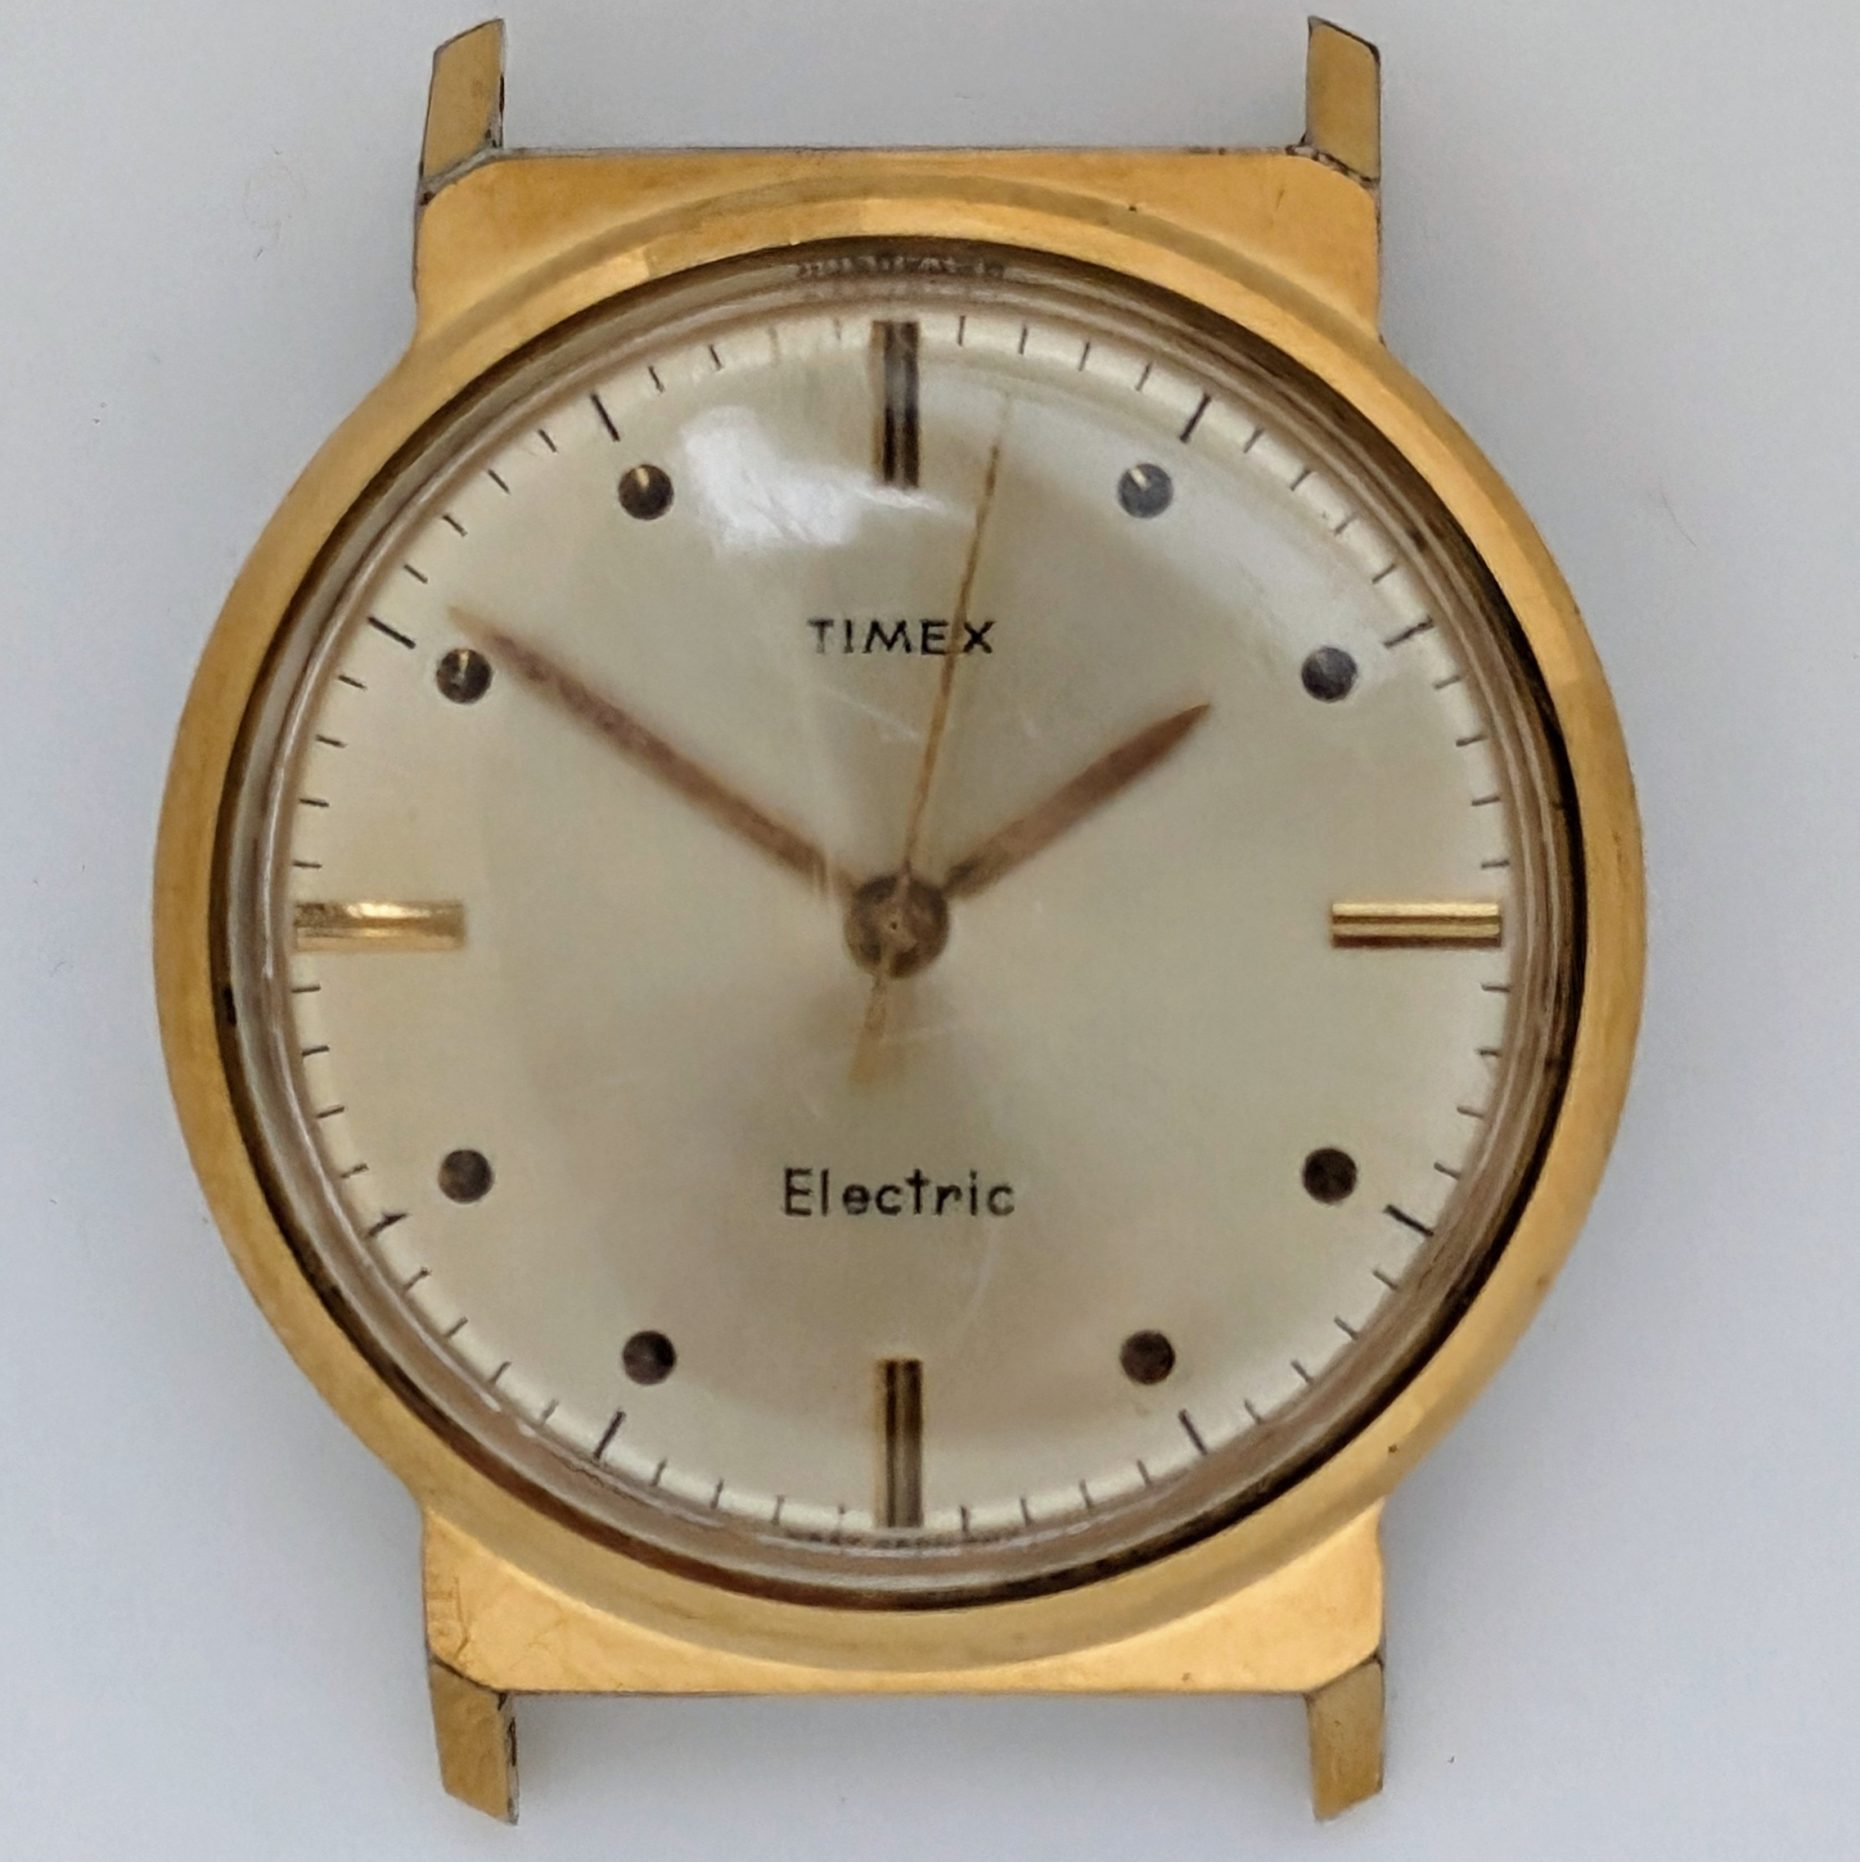 Timex Electric 1963 Ref. 9017 6763